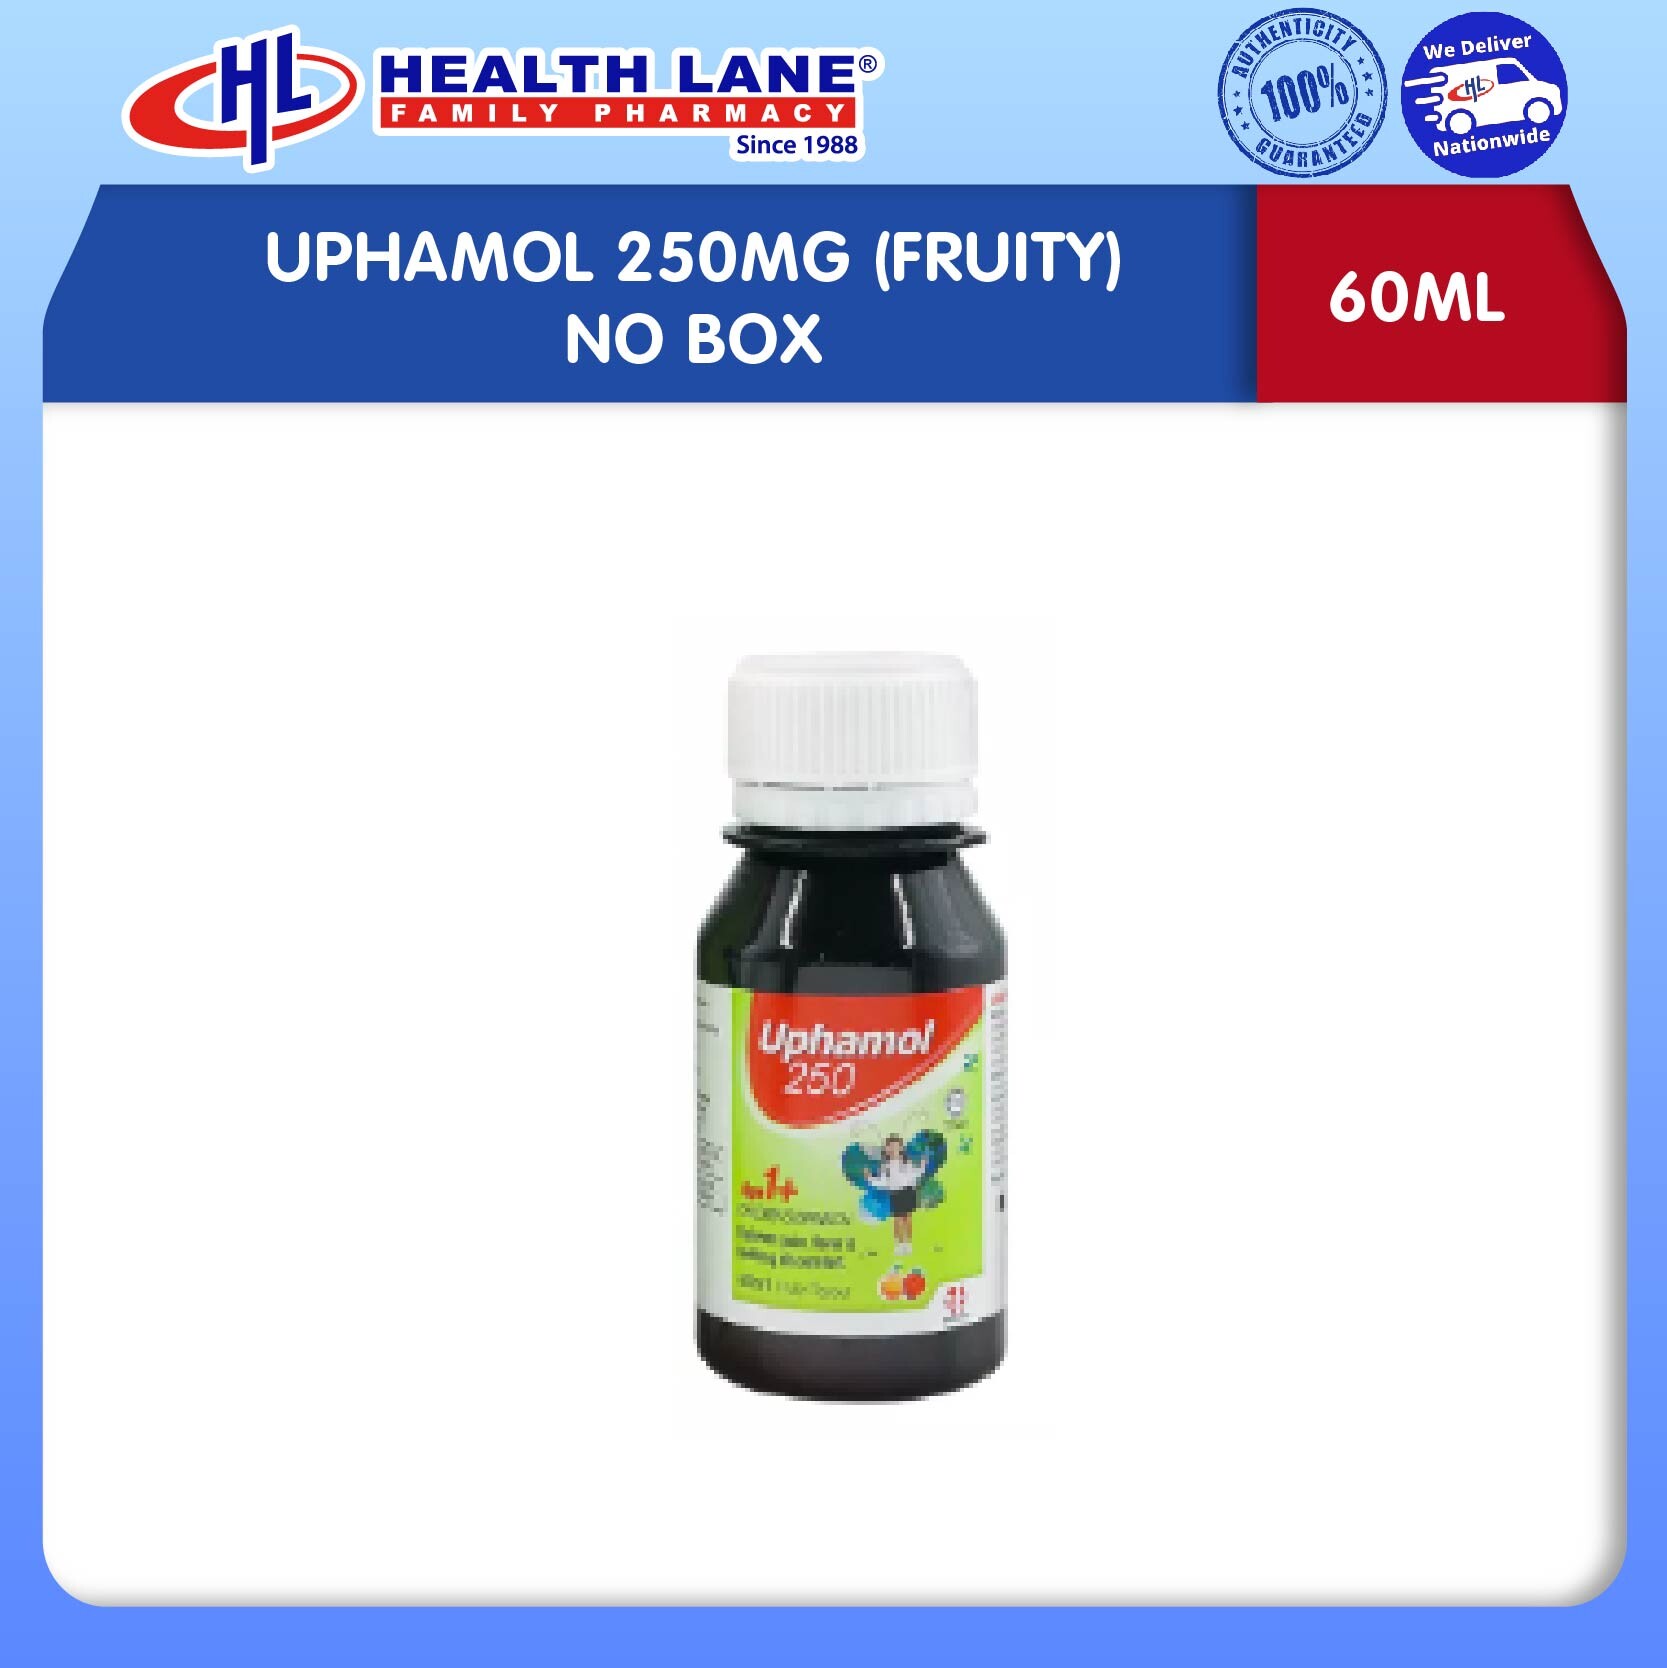 UPHAMOL 250MG 60ML (FRUITY) NO BOX